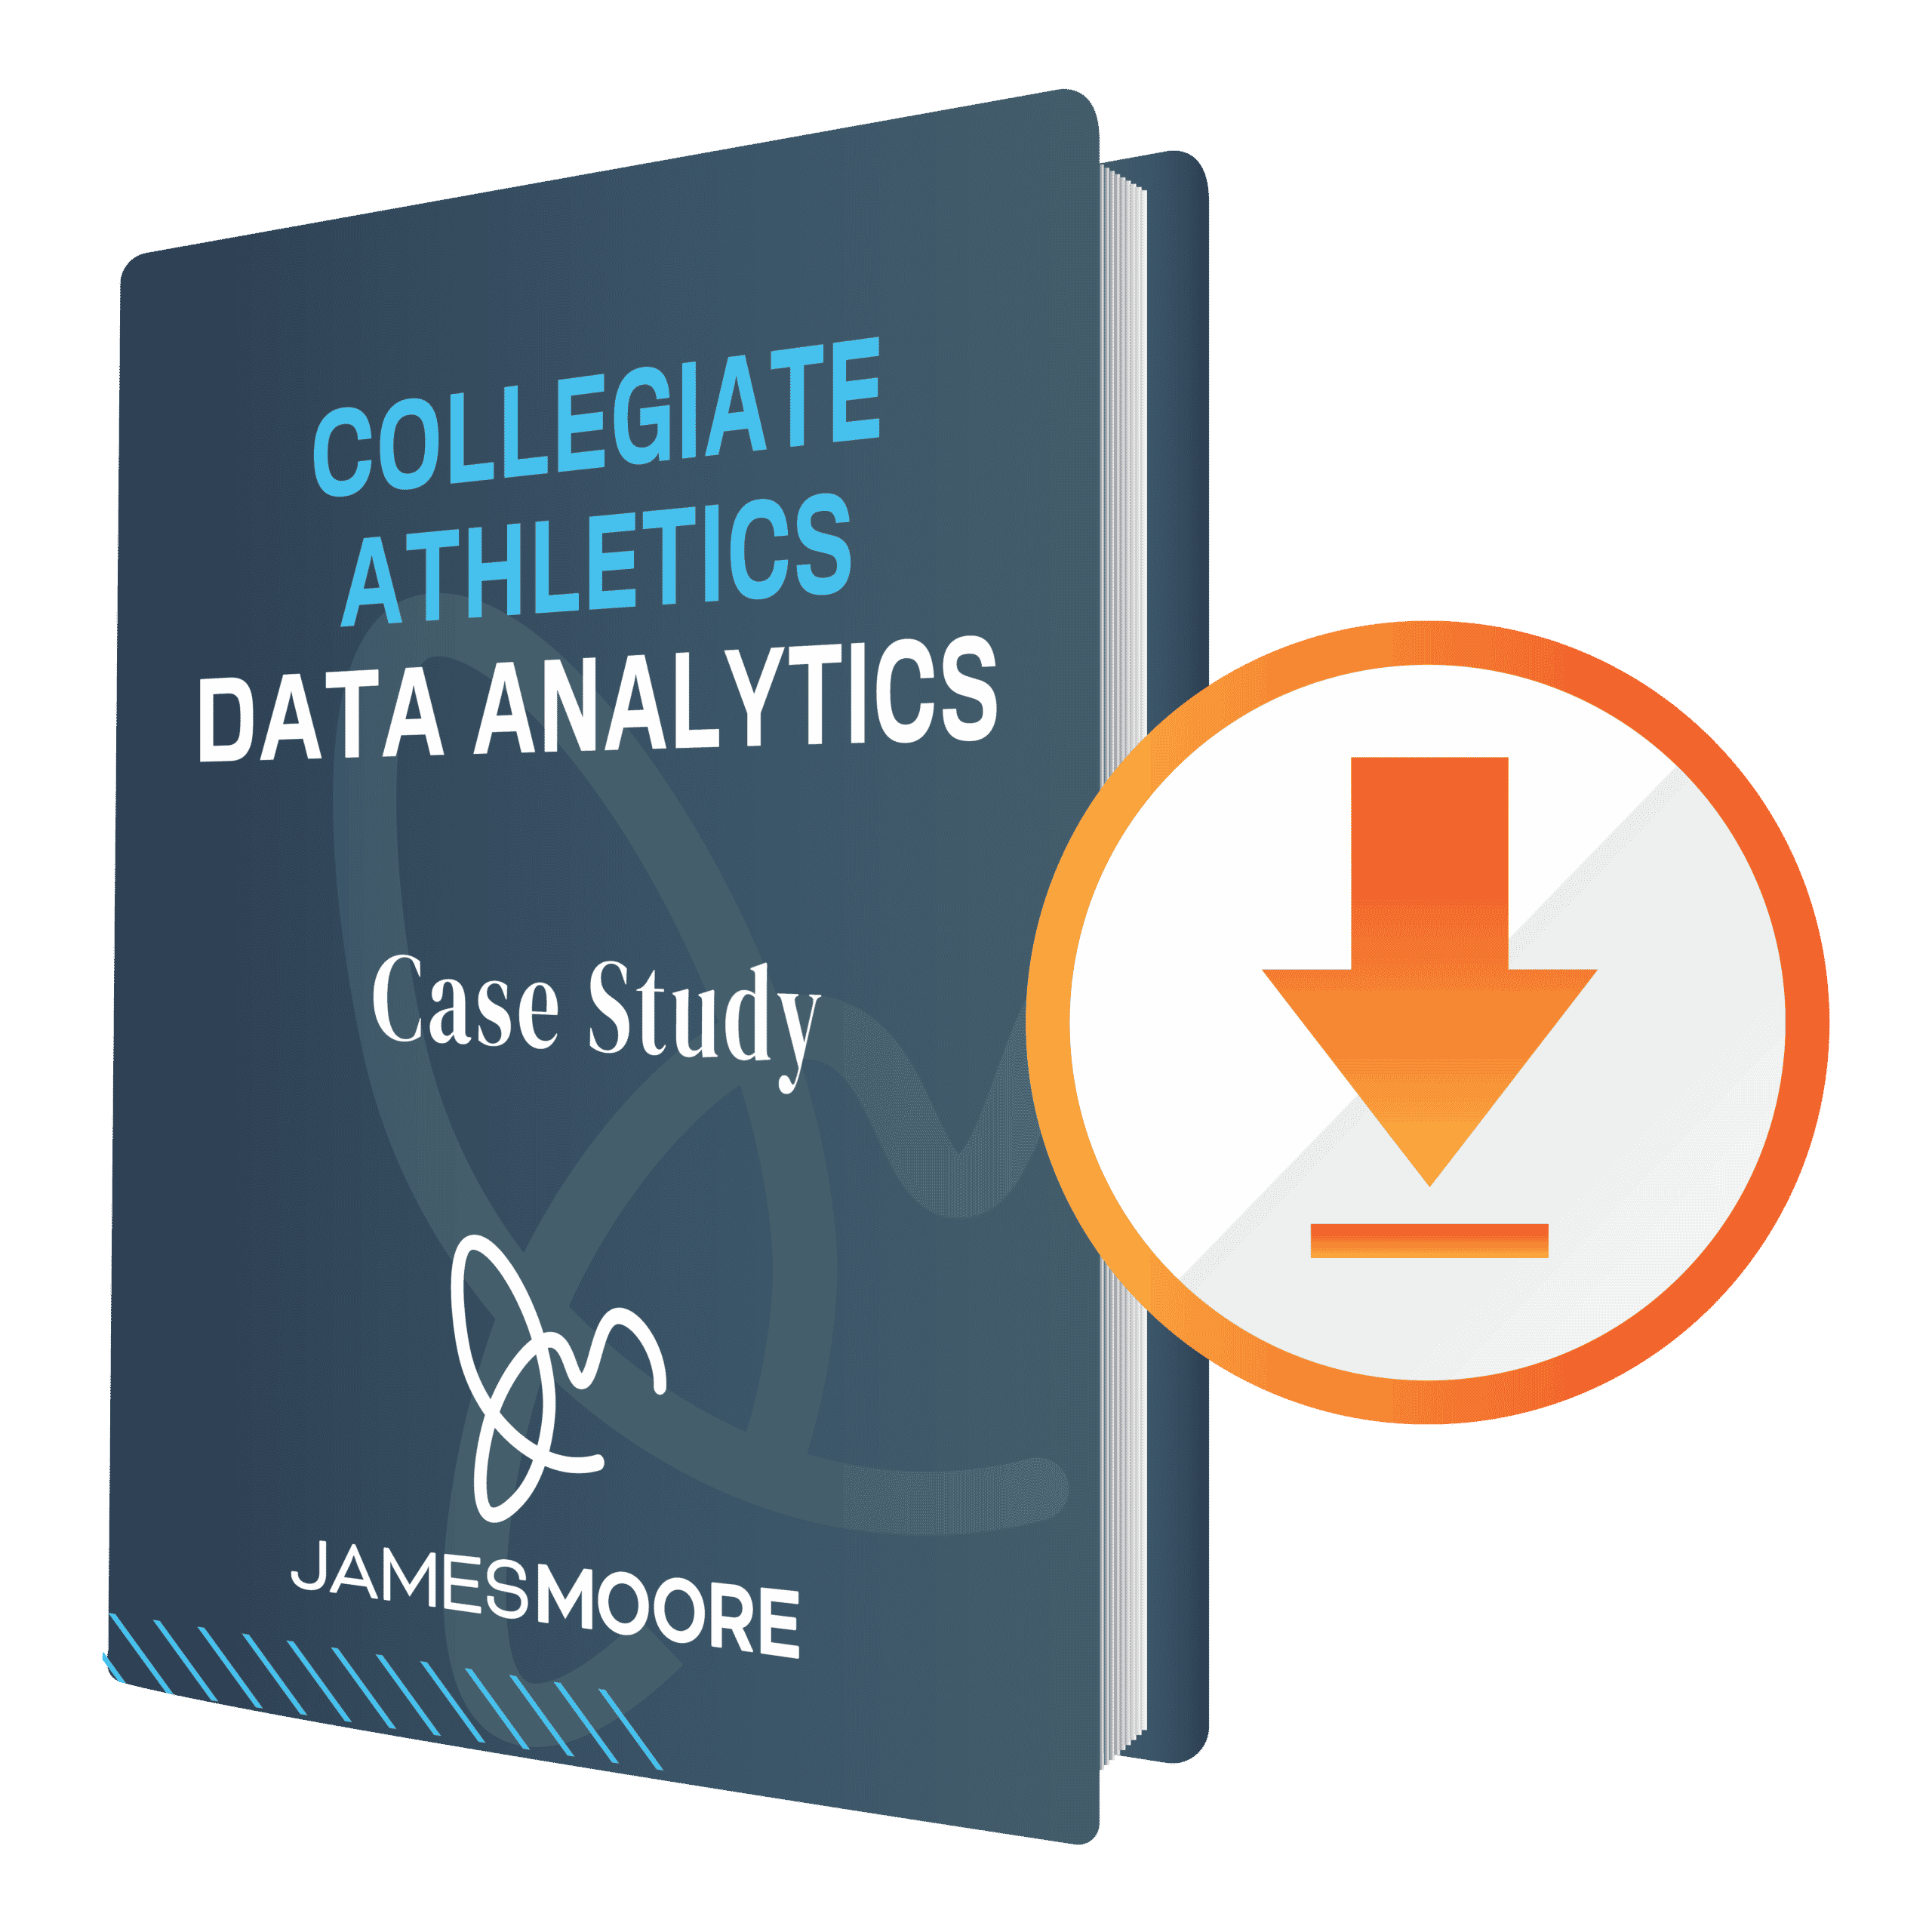 Cover image for the Collegiate Athletics Data Analytics Case Study